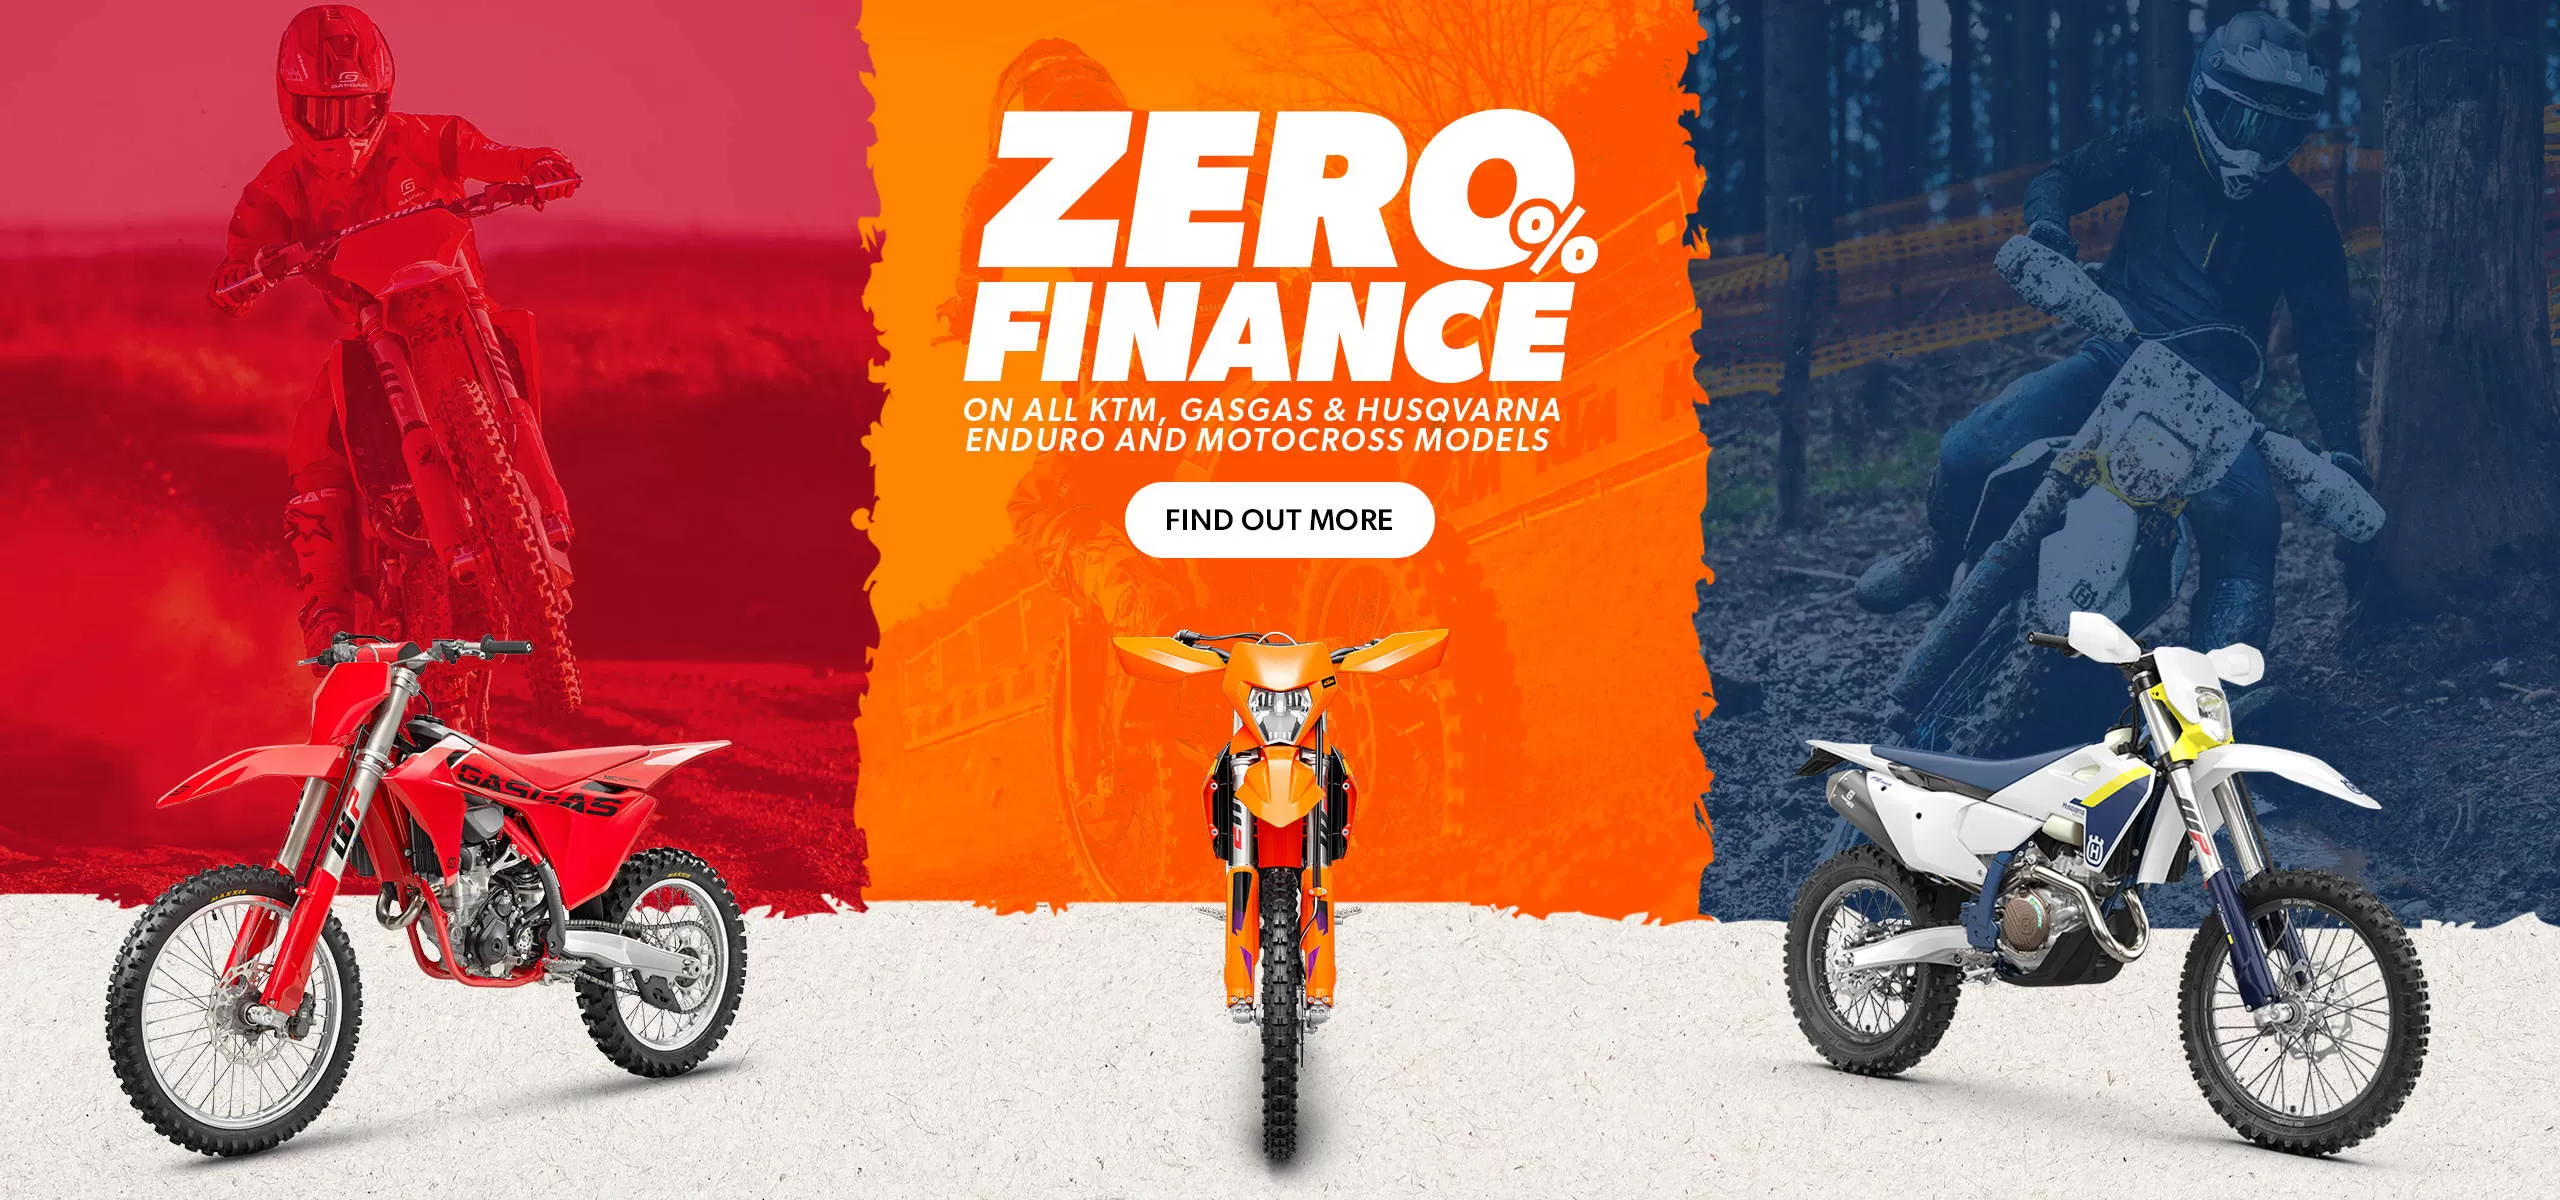 0% Finance available on all KTM, GasGas & Husqvarna Enduro and Motocross models